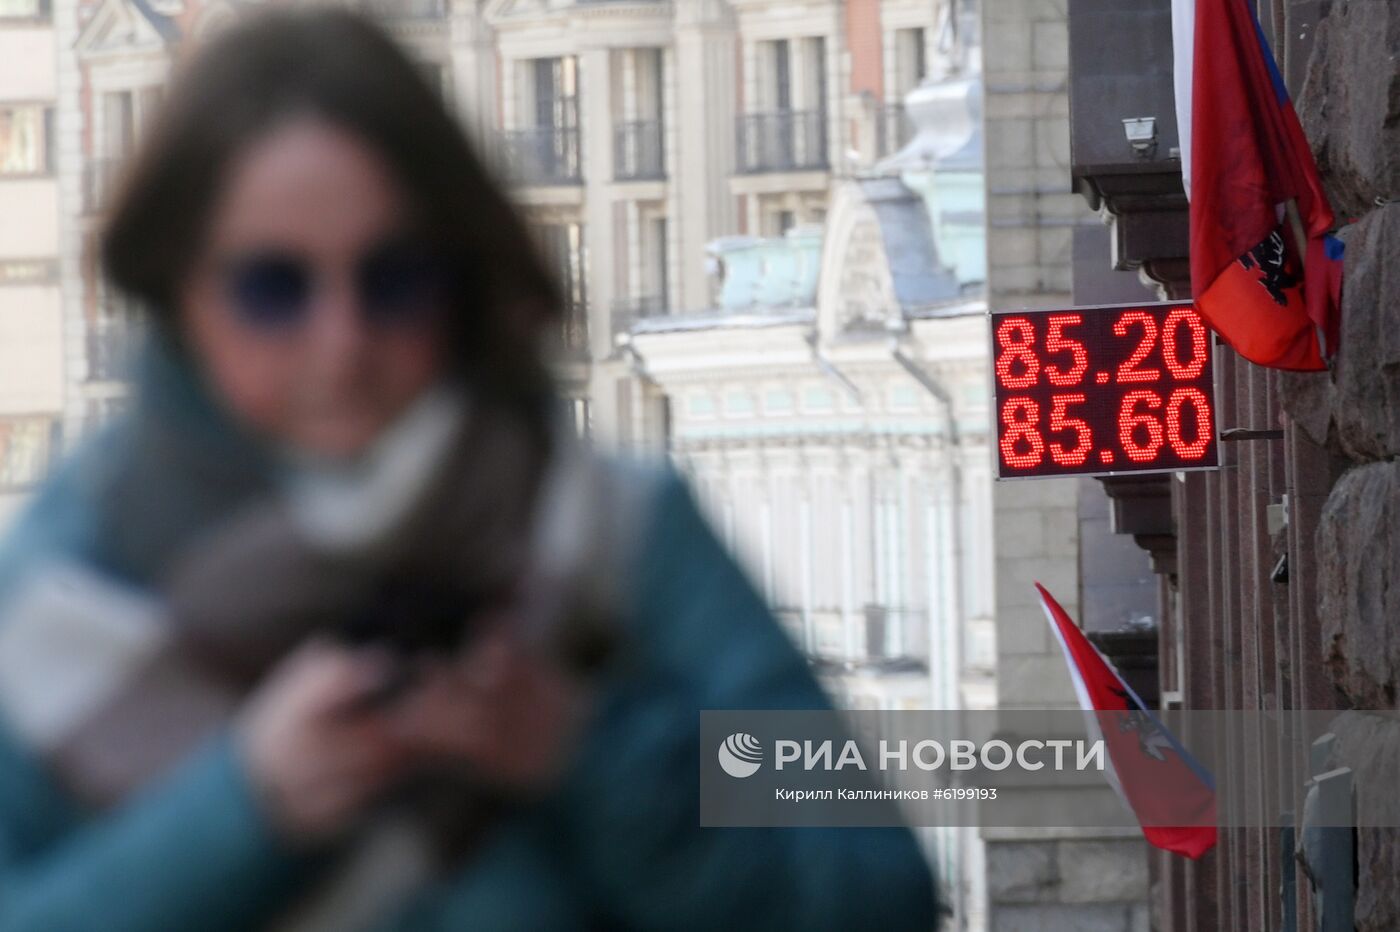 Курс валют в Москве 